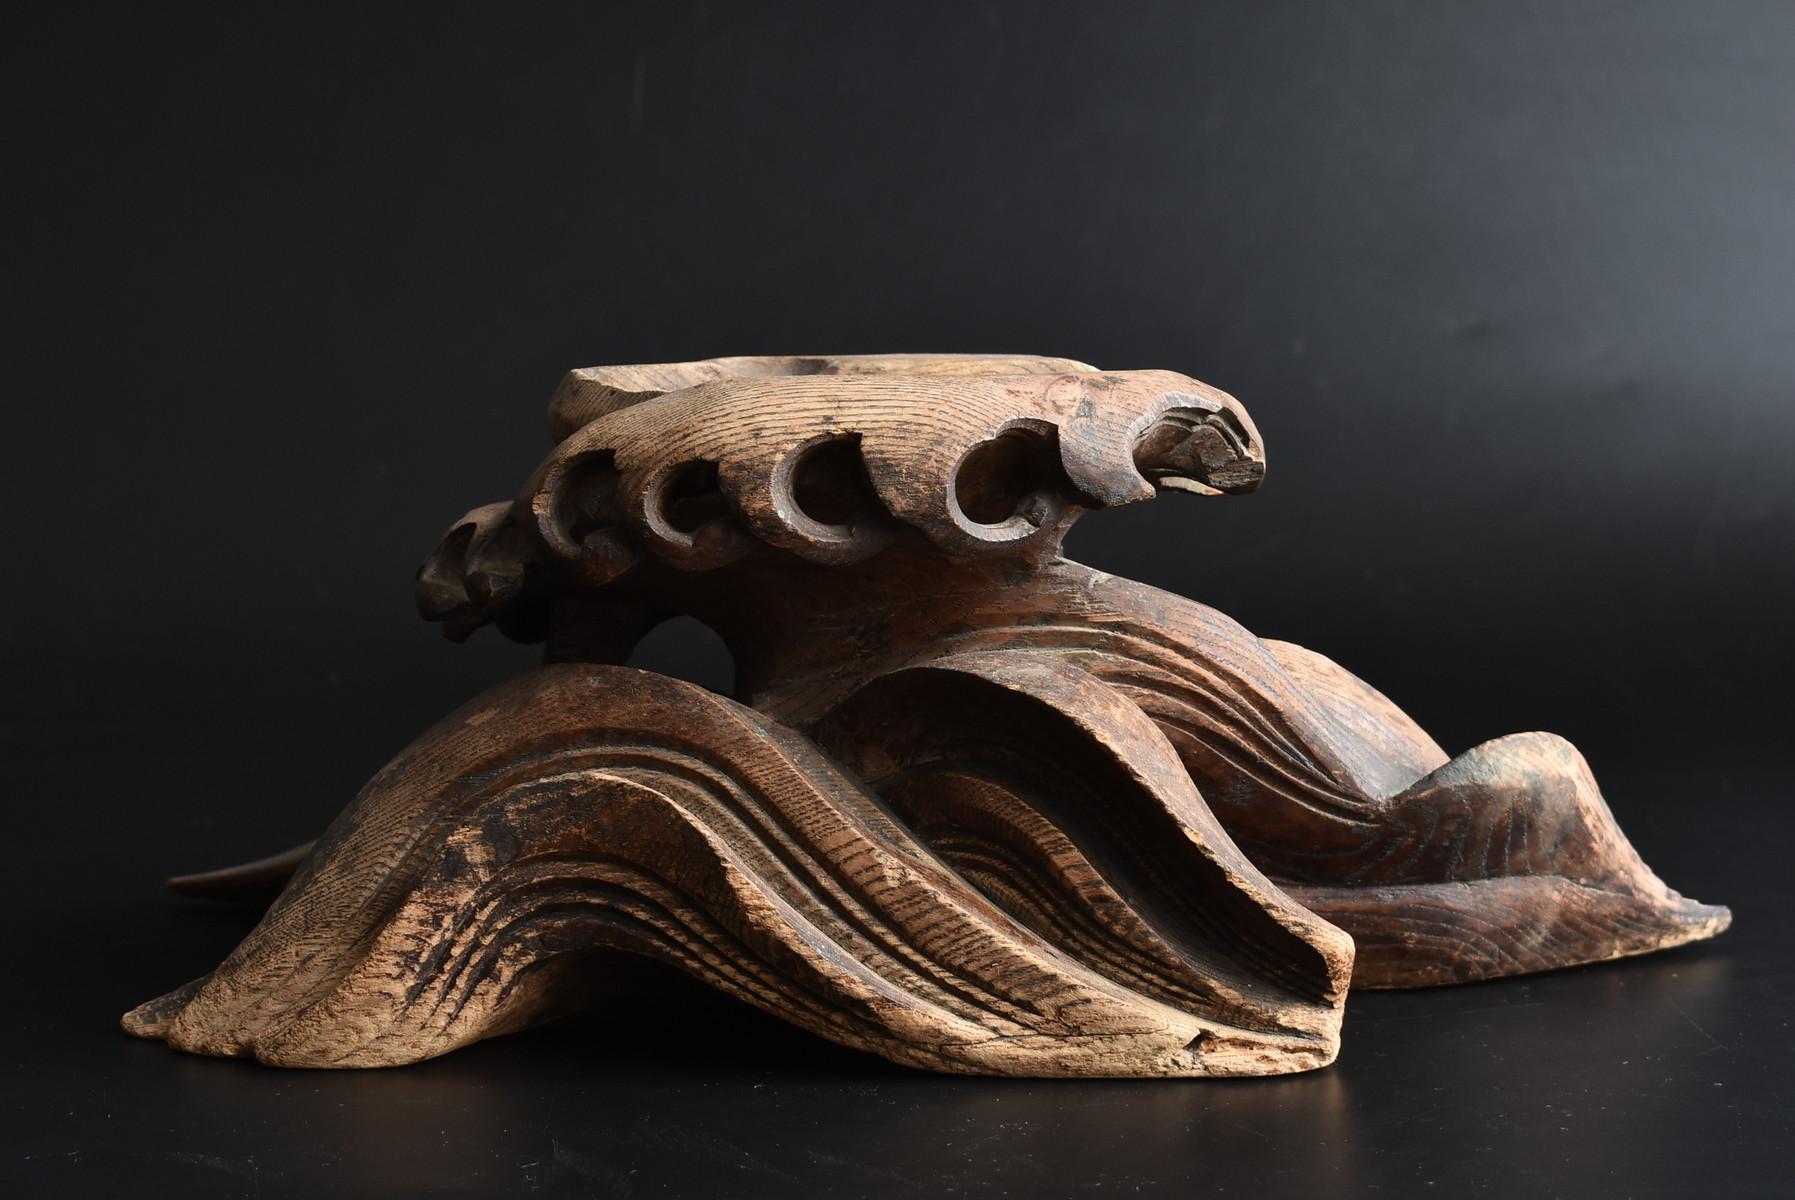 Japanese Antique Wood Carving Wavy Figurine / Incense Burner / Decoration Stand 3